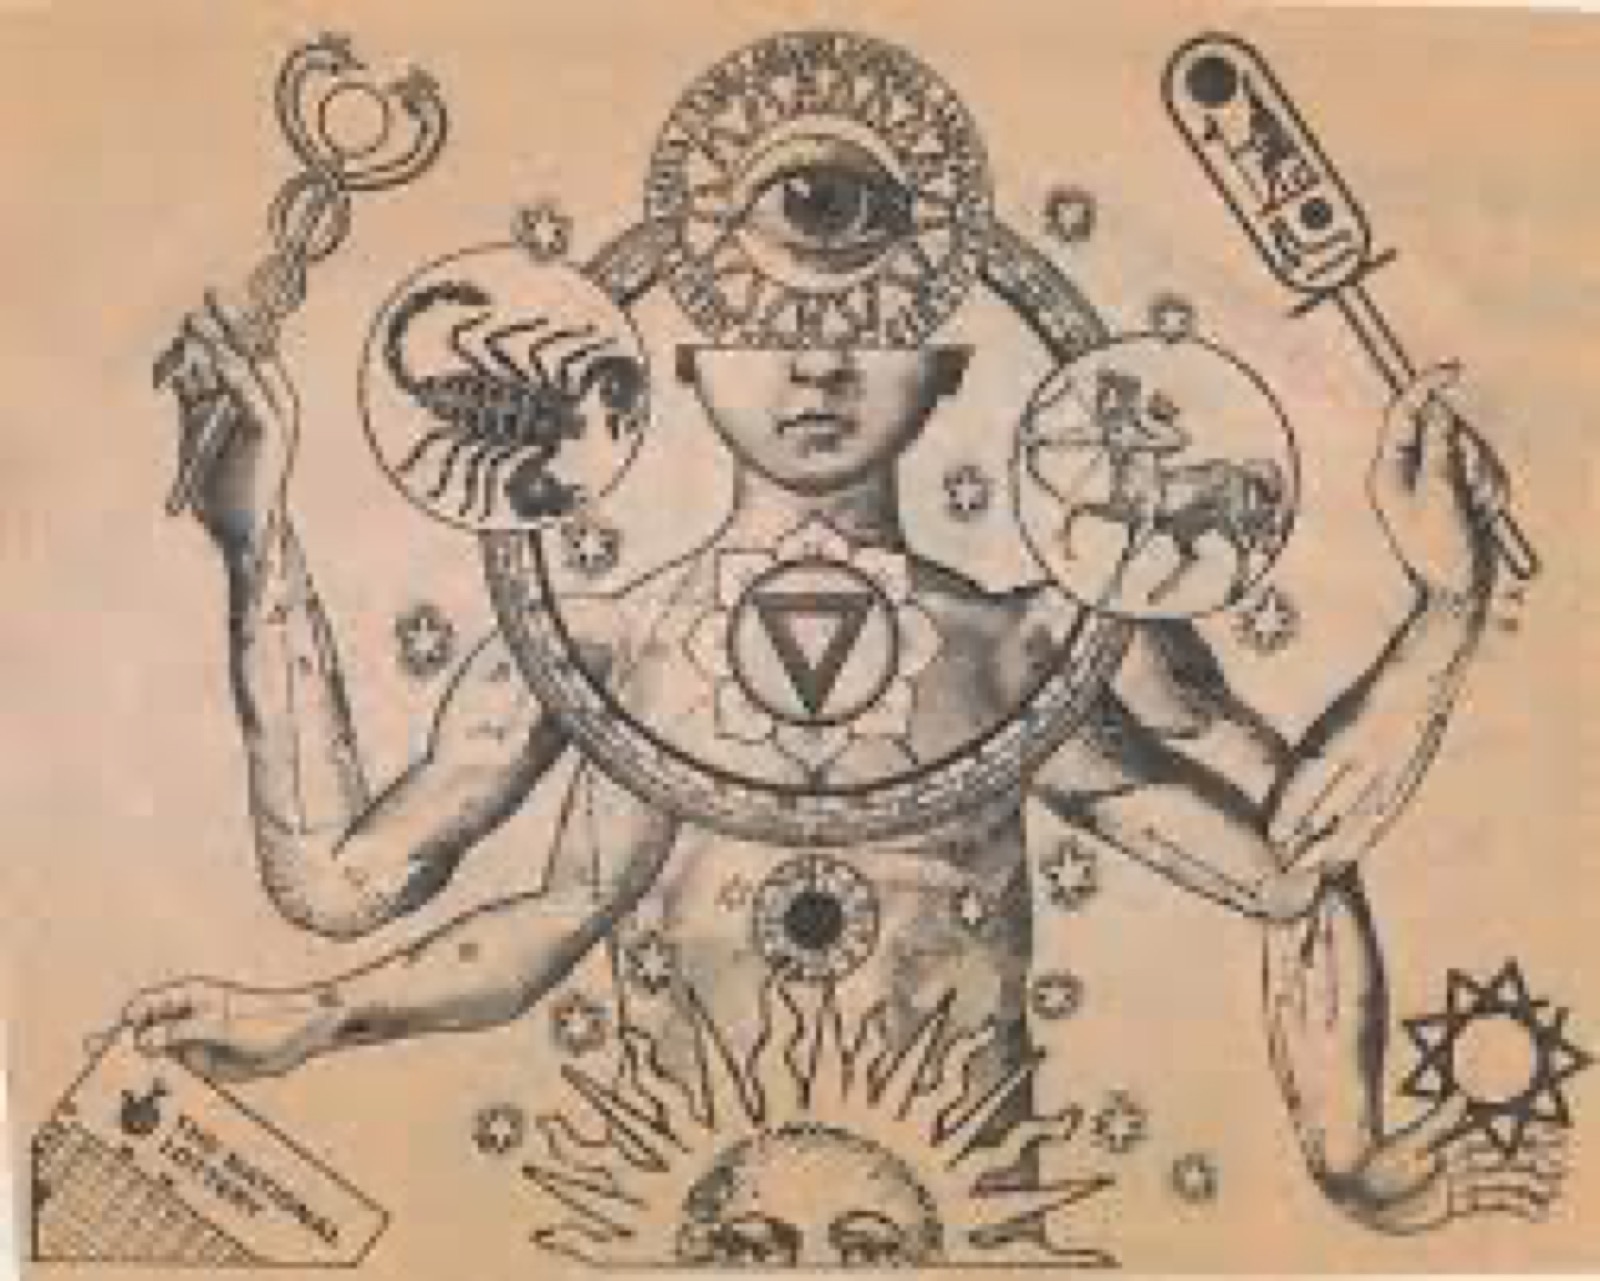 Esoterica, The Occult, and Secret Societies: A Venn Diagram Approach